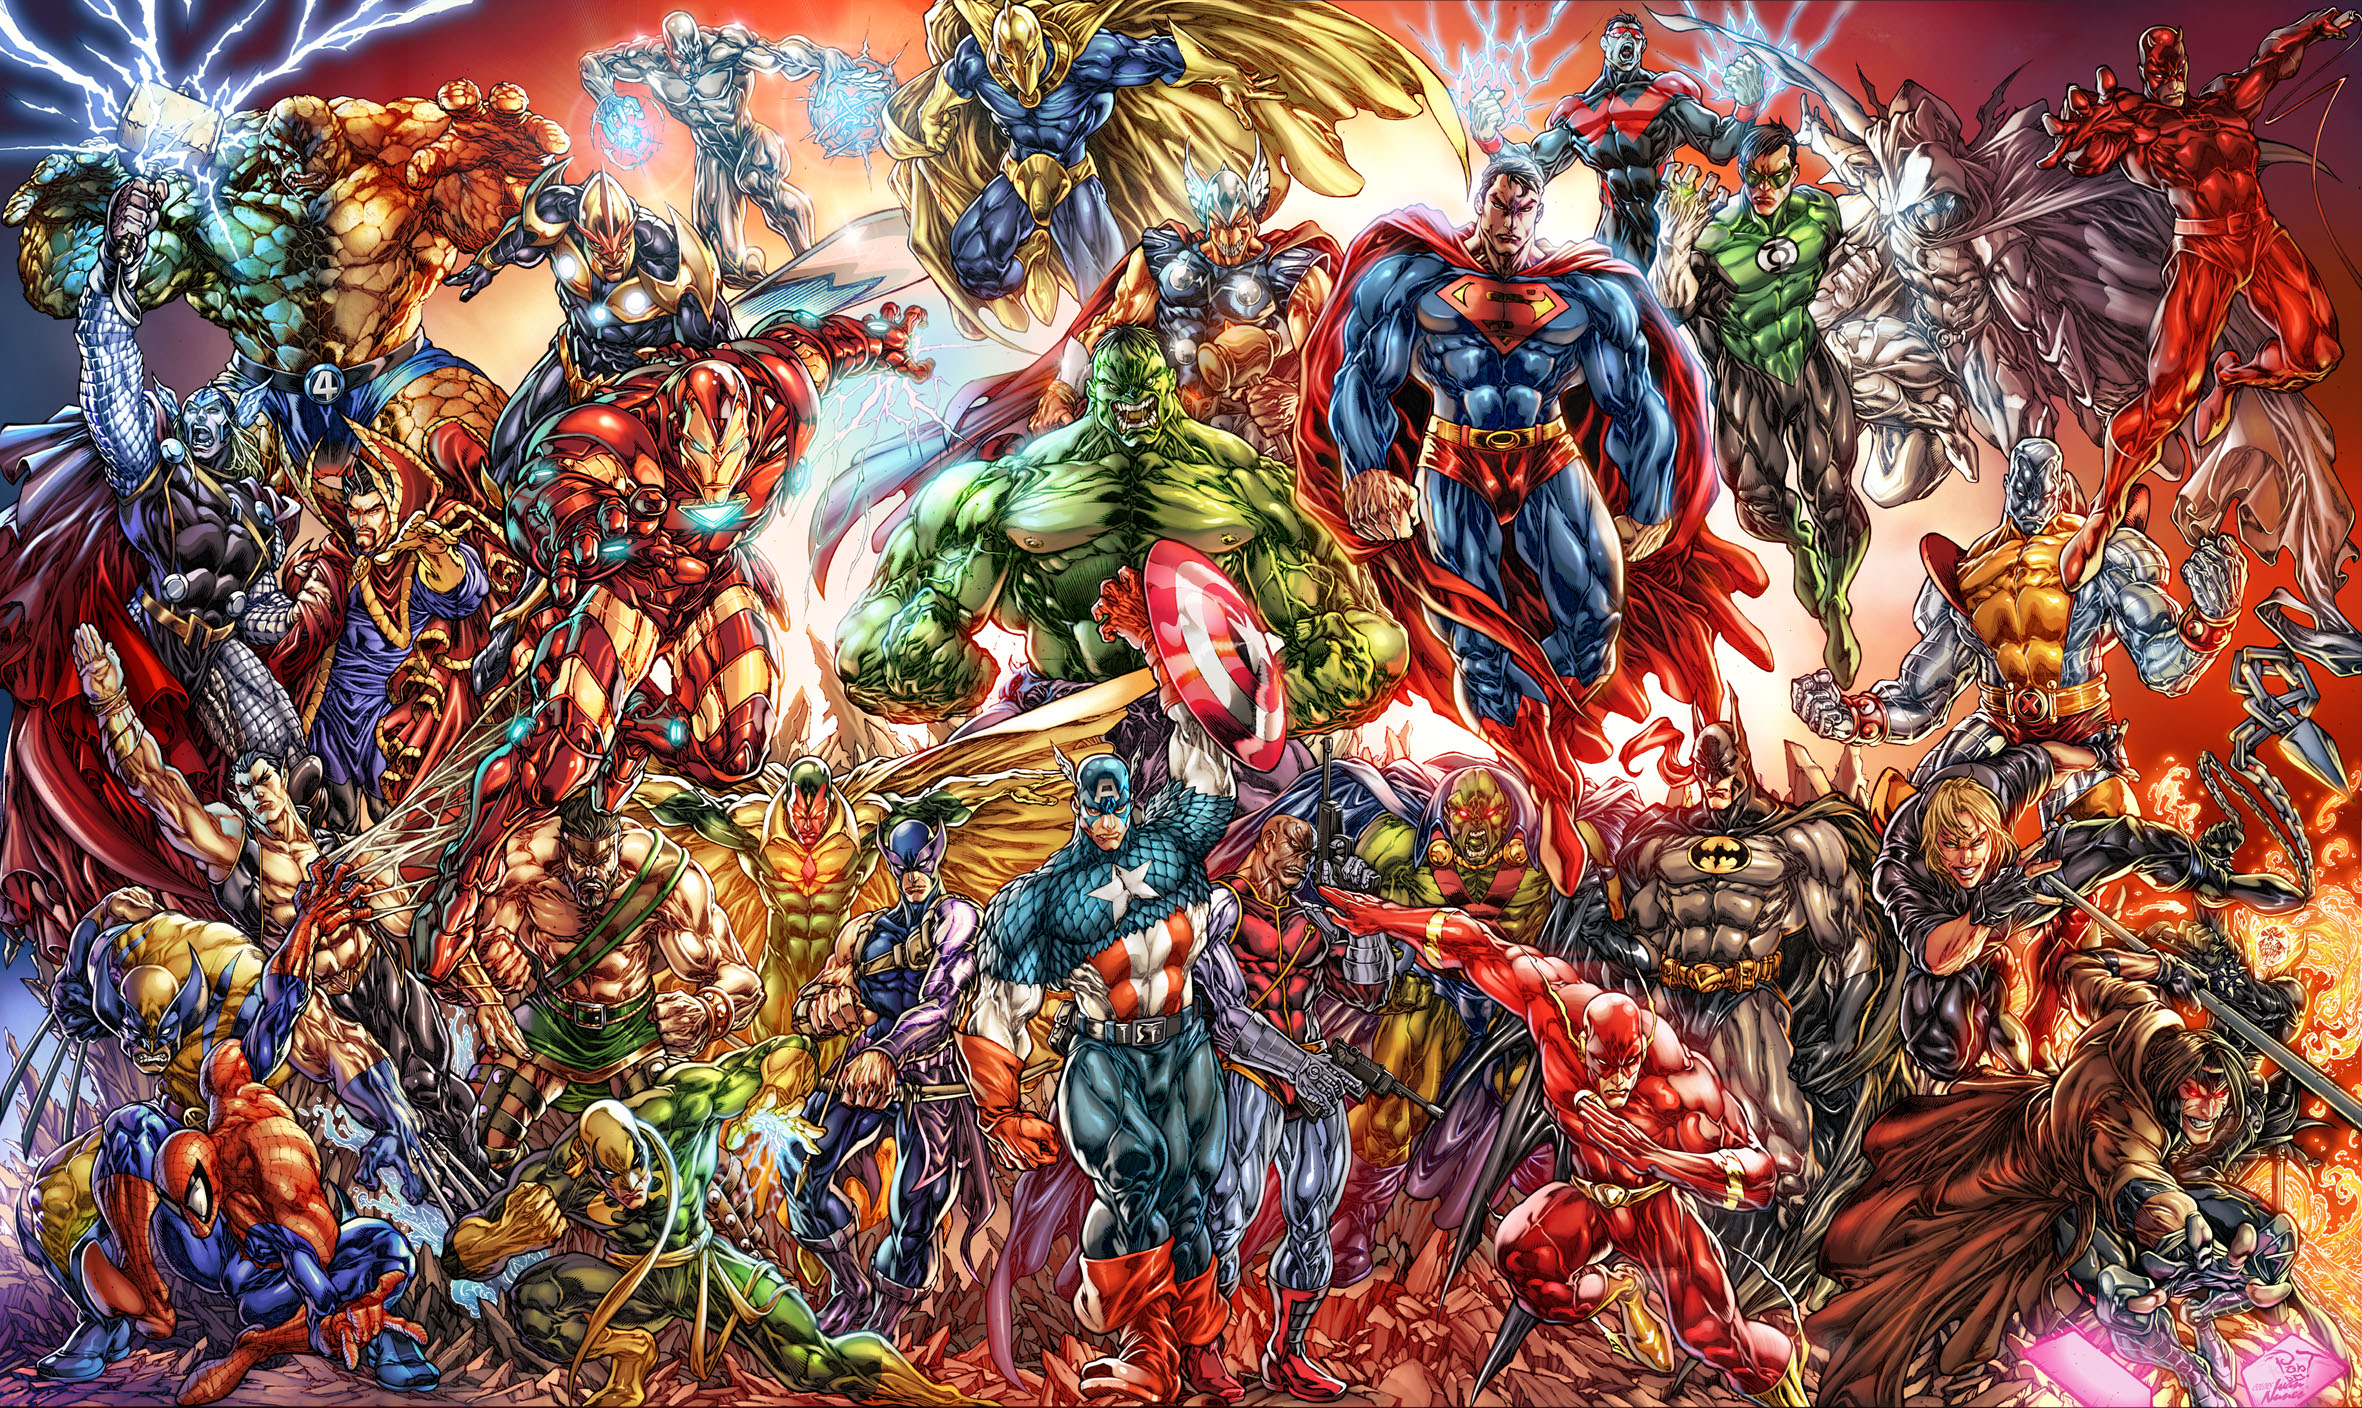 hal jordan, superman, martian manhunter, batman, spider man, daredevil, dc comics, hulk, comics, collage, barry allen, wolverine, ghost rider, ben grimm, beta ray bill, captain america, clint barton, colossus, danny rand, deathlok, doctor fate (dc comics), doctor strange, flash, gambit (marvel comics), green lantern, hawkeye, hercules (marvel comics), iron fist (marvel comics), iron man, j'onn j'onzz, longshot (marvel comics), moon knight, namor the sub mariner, nightwing, nova (marvel comics), peter parker, silver surfer, sub mariner, thing (marvel comics), thor, vision (marvel comics), wonder man cellphone